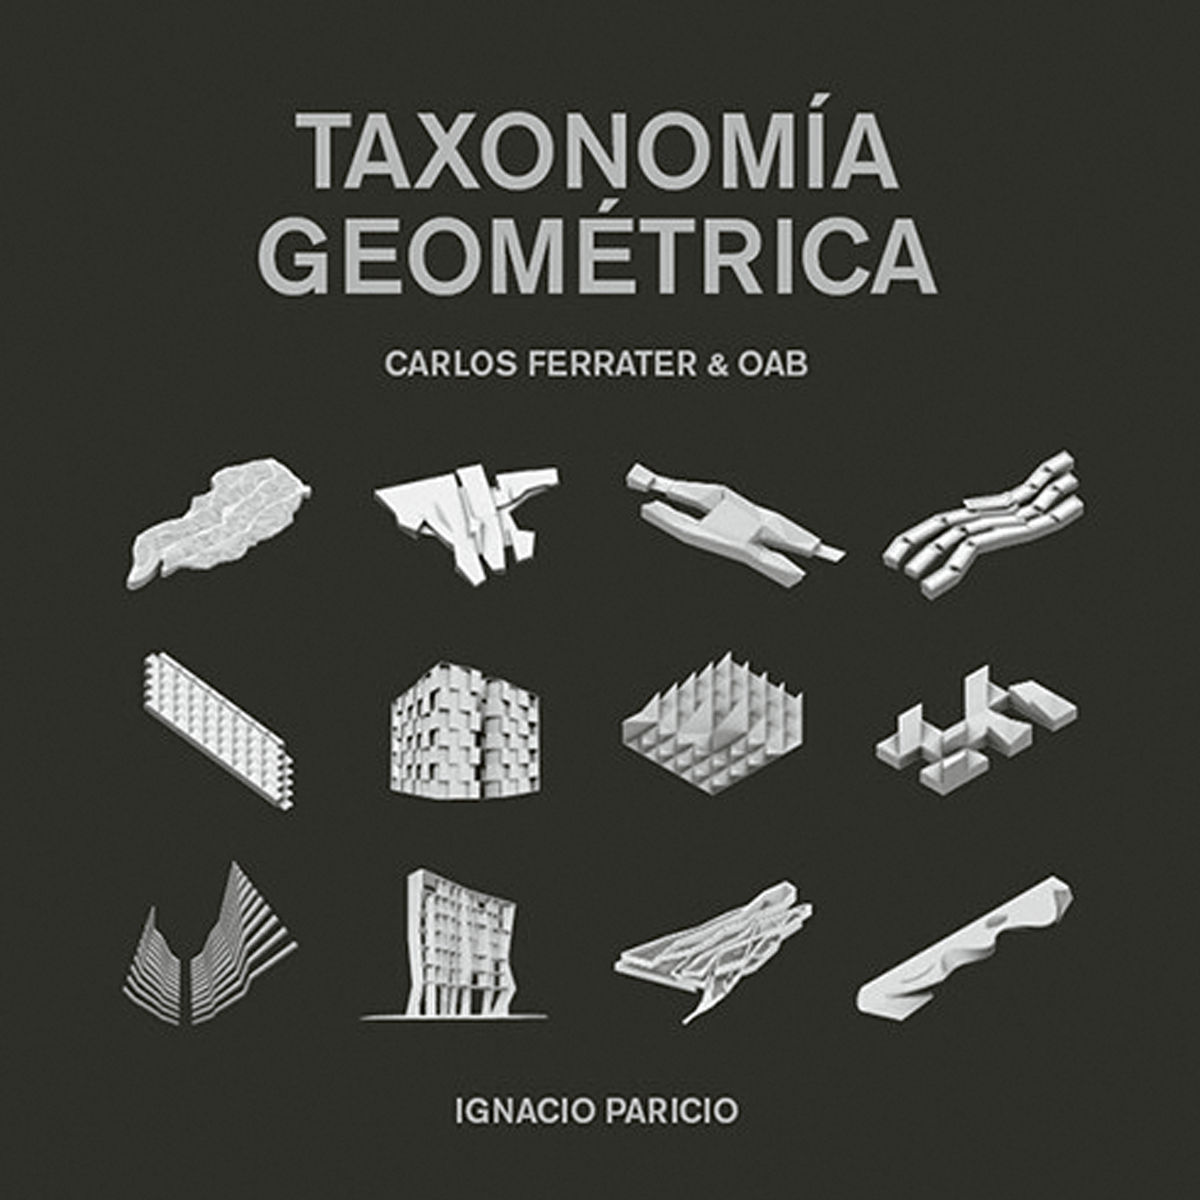 Taxonomía geométrica